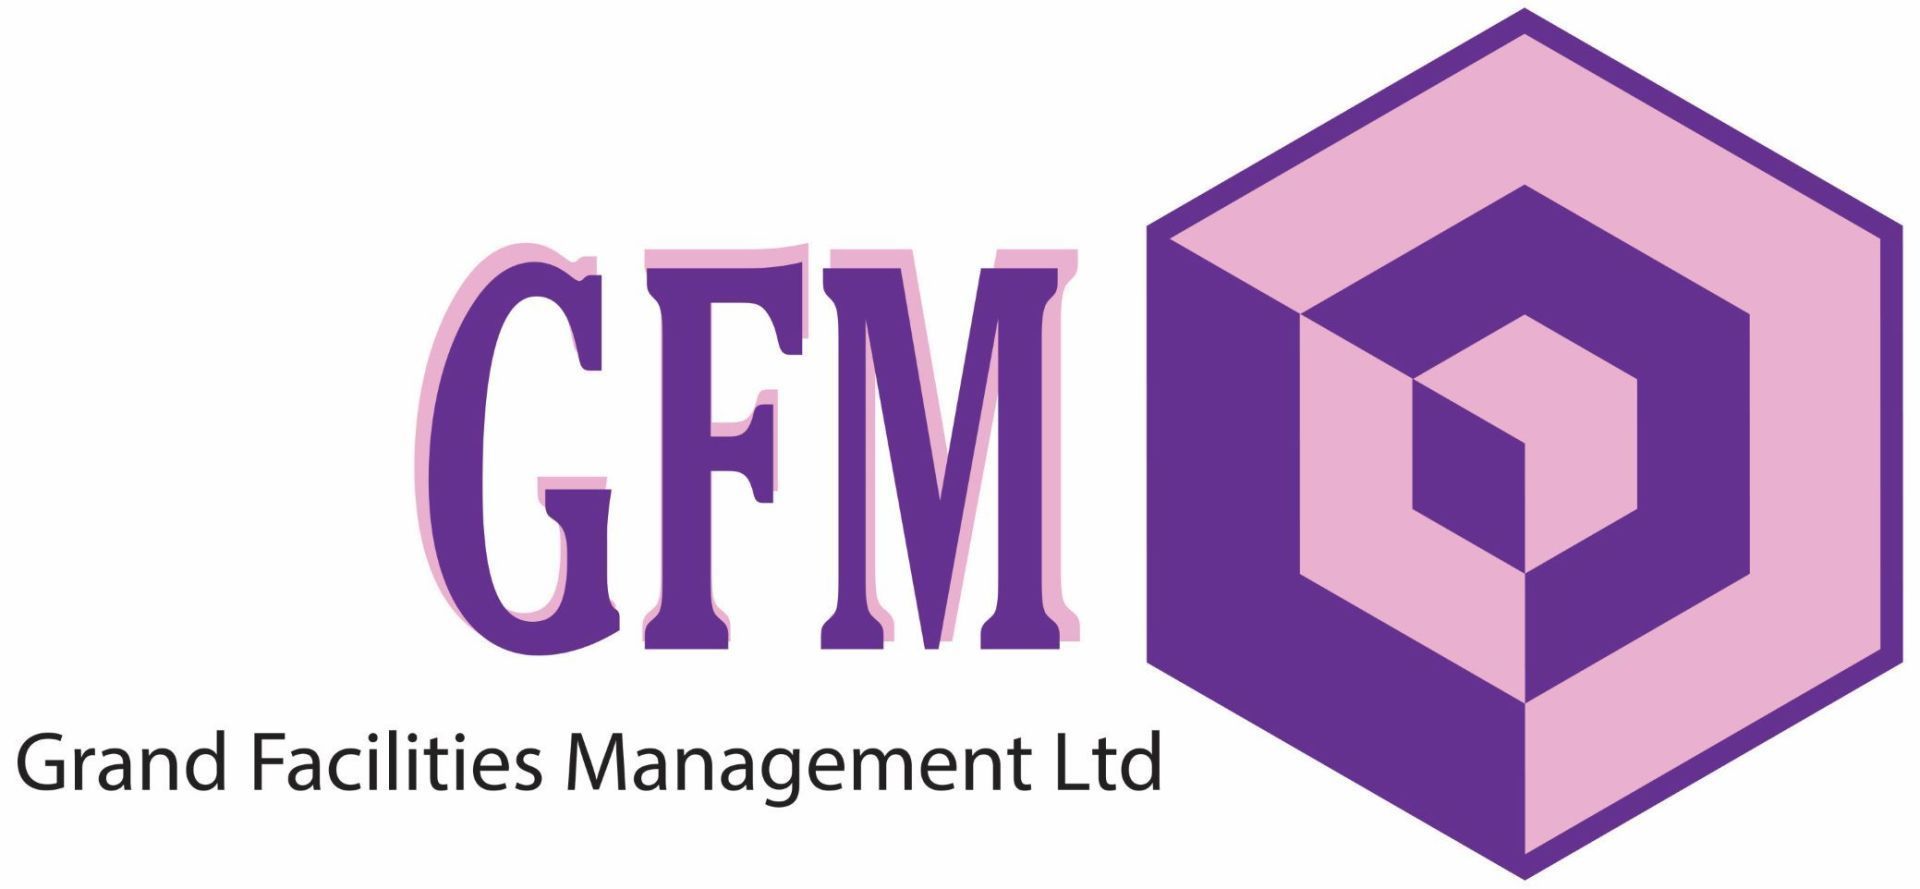 Grand Facilites Management logo of multi-layered hexagon